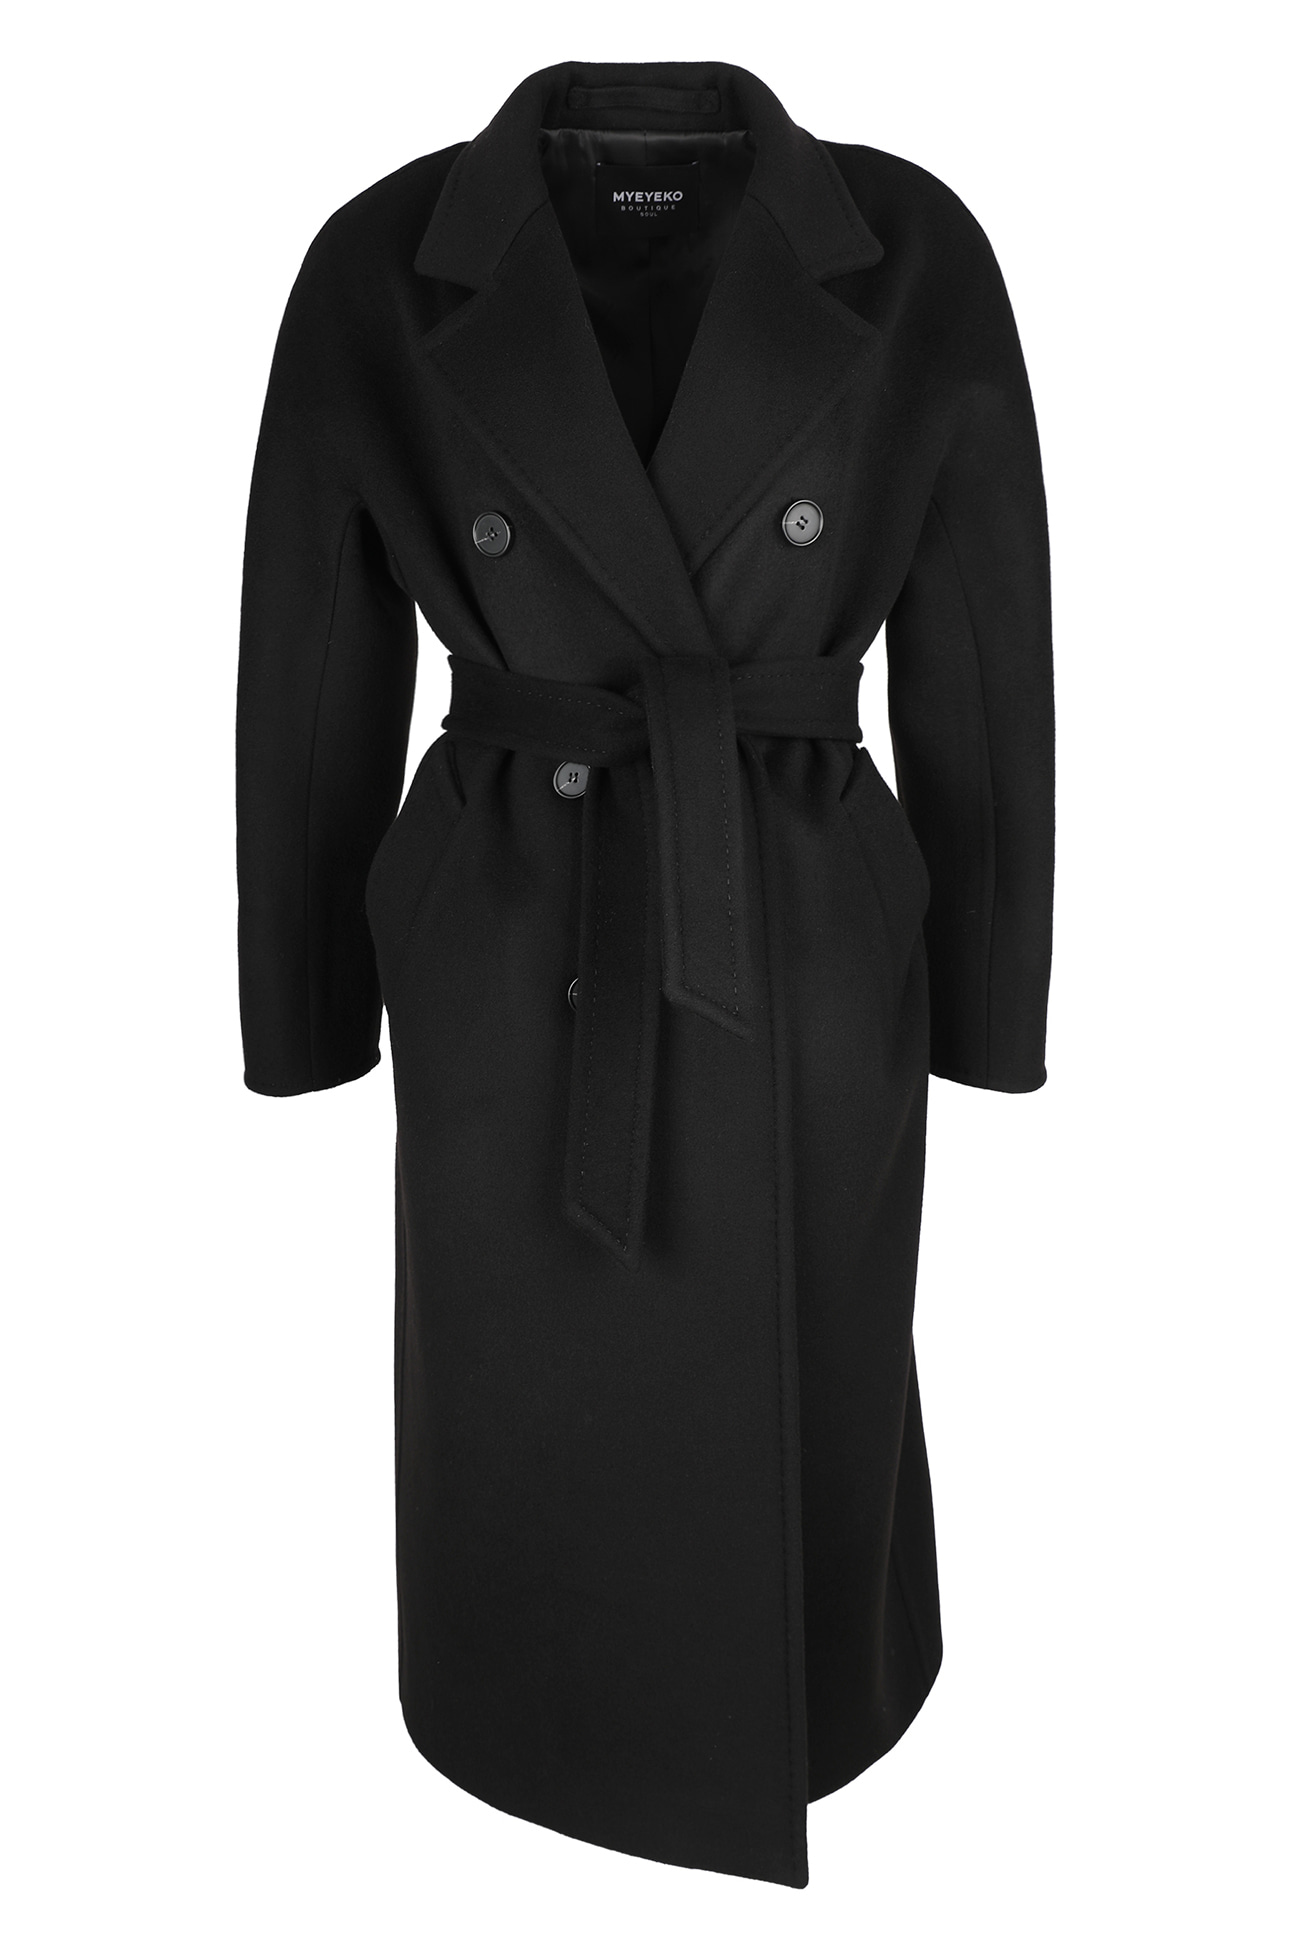 HIGH QUALITY LINE - 램스울 90/캐시미어10 Coat (BLACK)